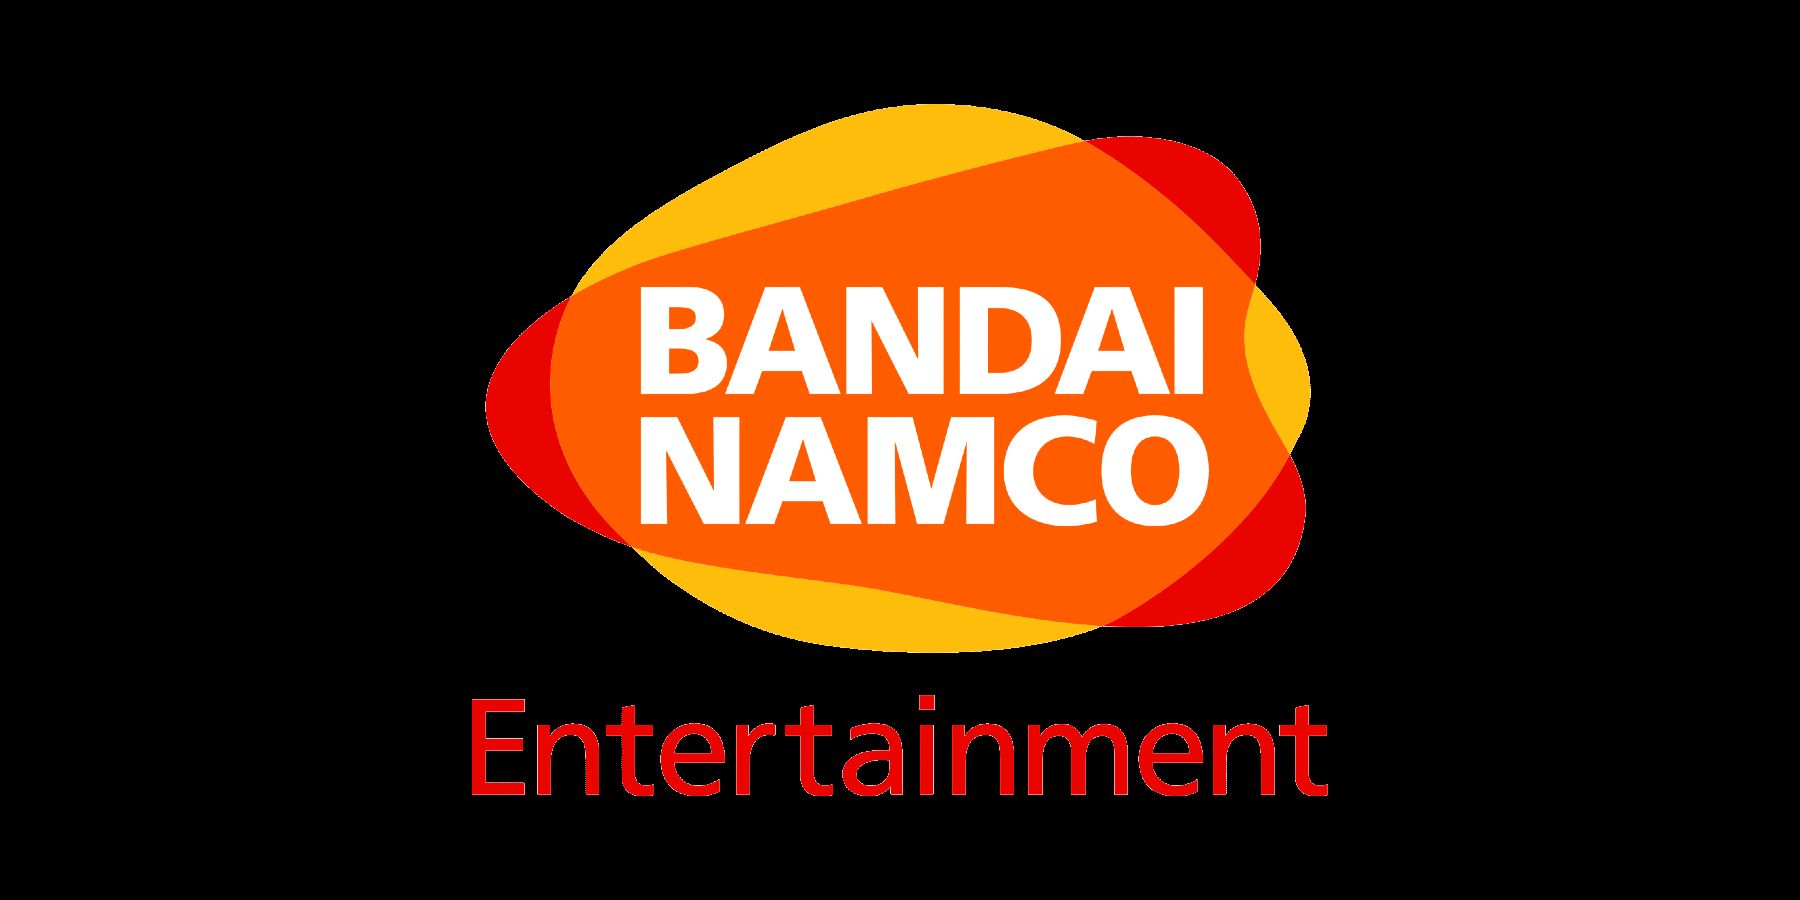 Bandai Namco har et nyt logo